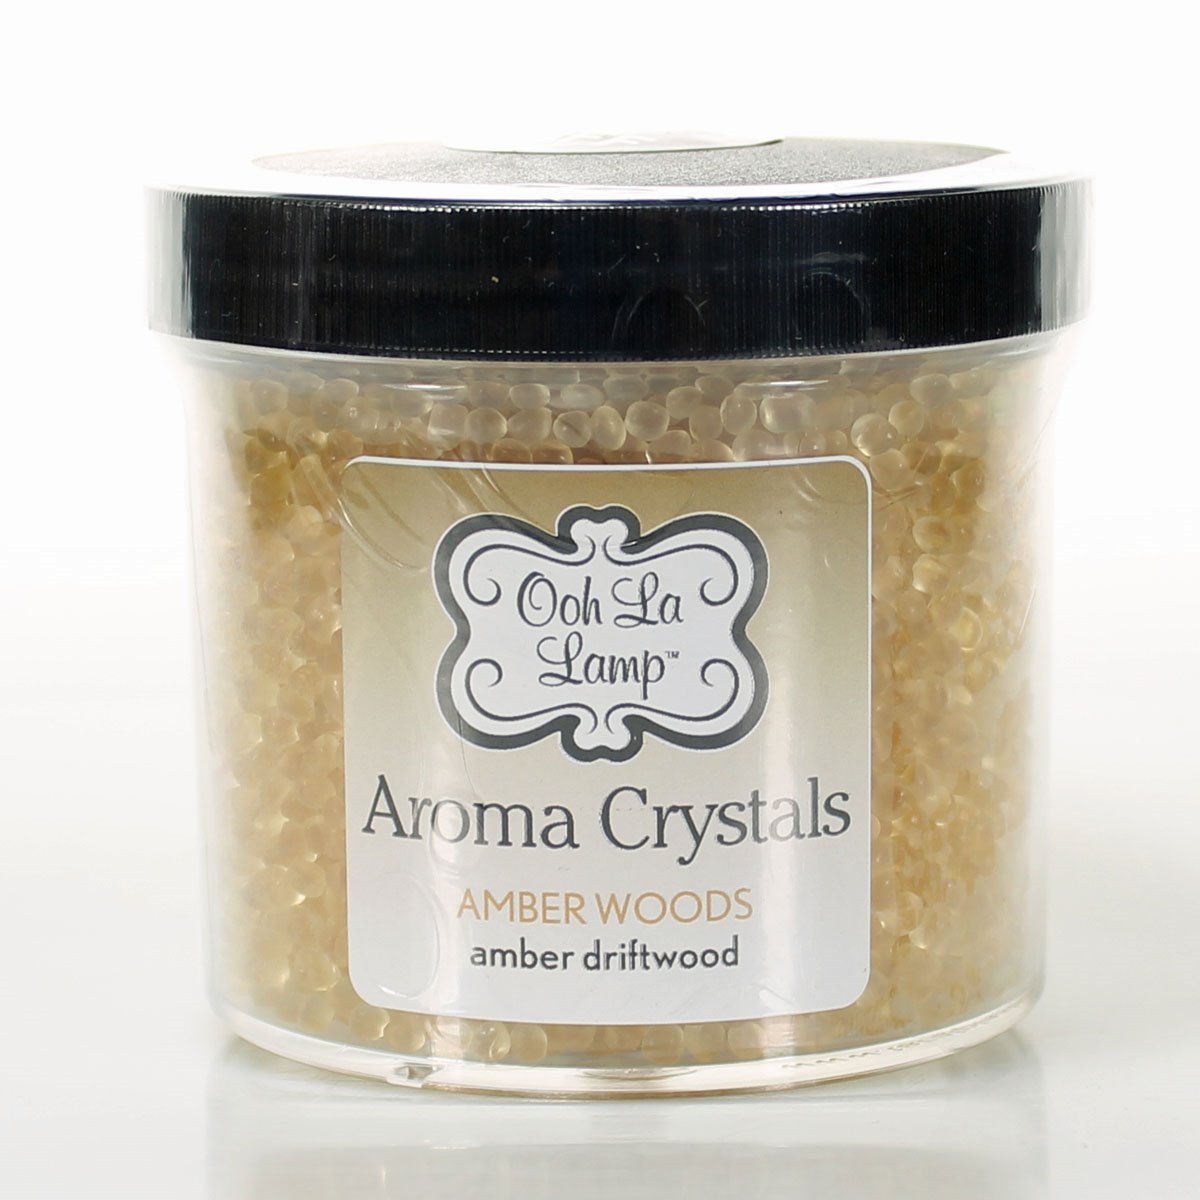 La Tee Da Ooh La Lamp Aroma Crystals Fragrance Amber Woods